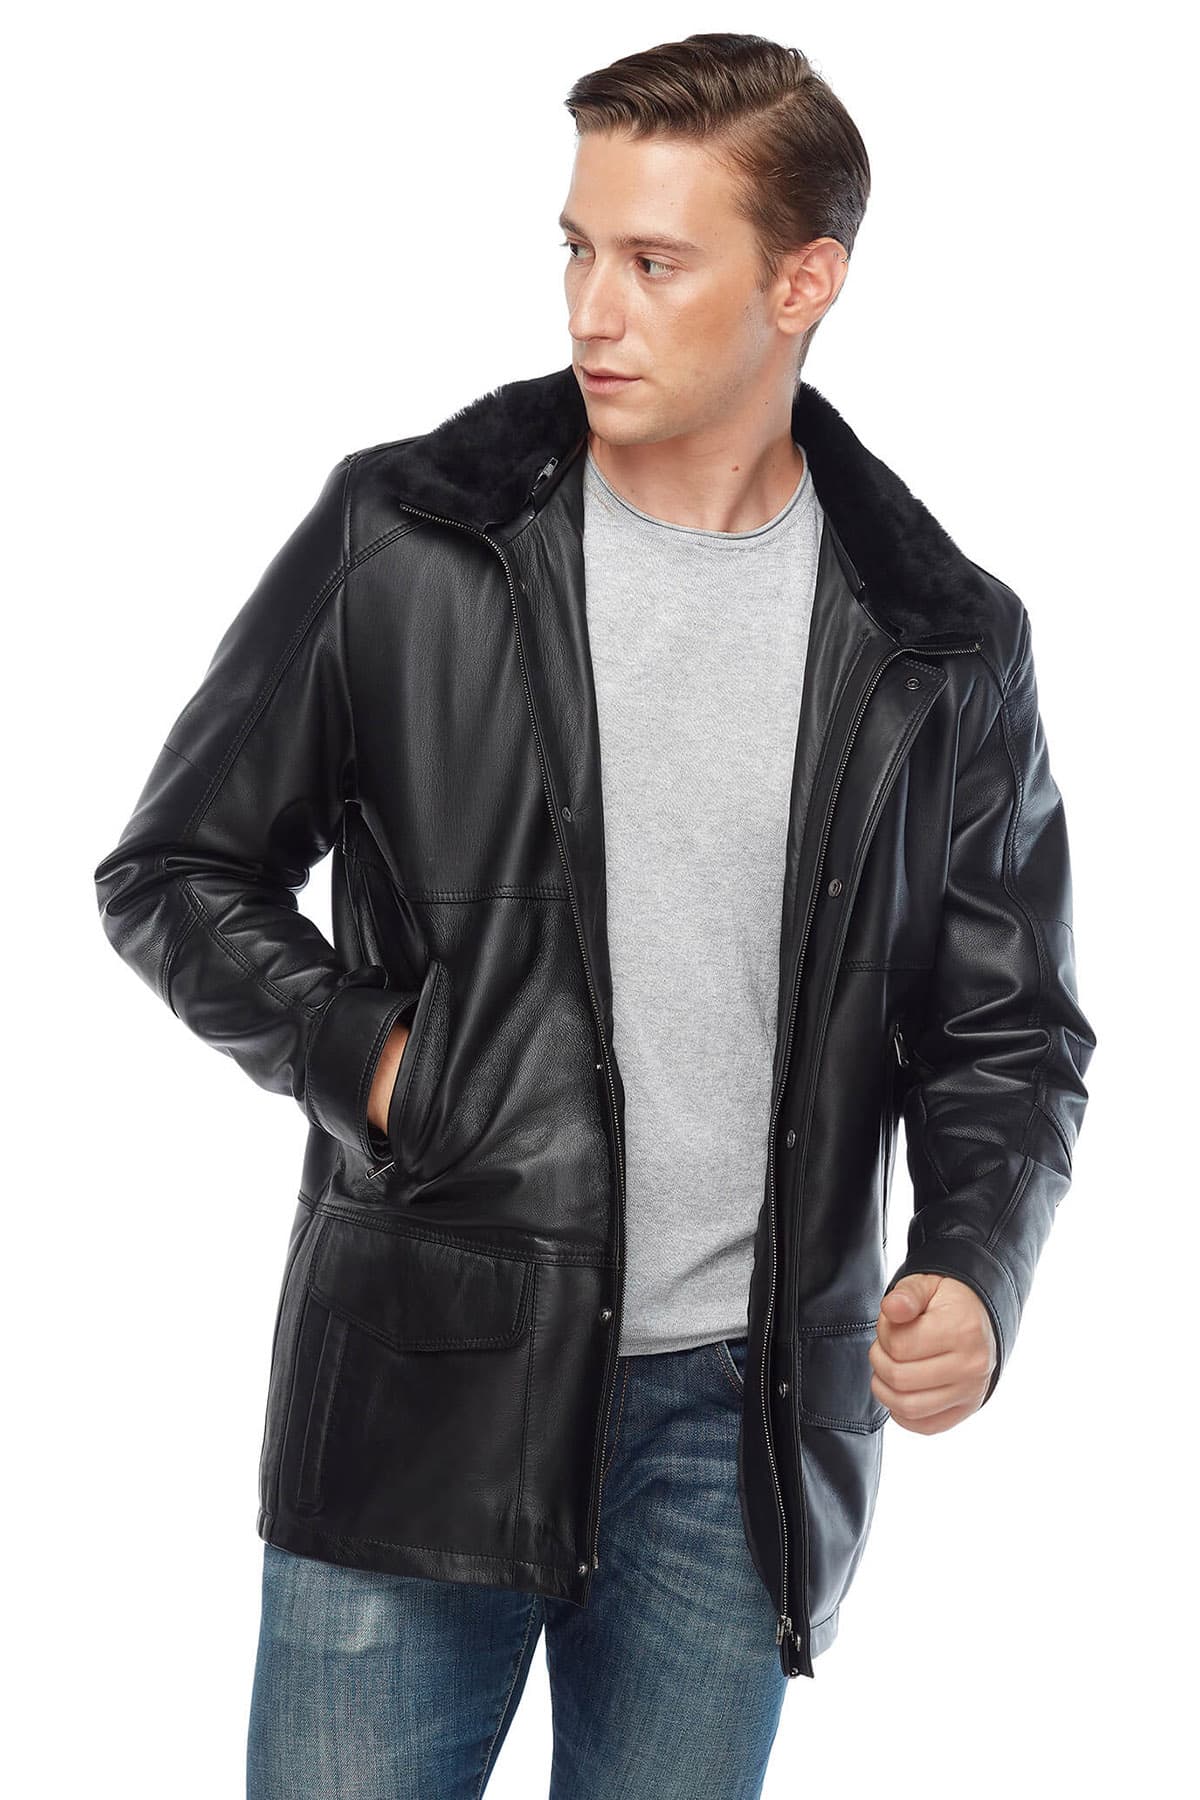 Sam Webb Black Men’s Leather Coat Pose